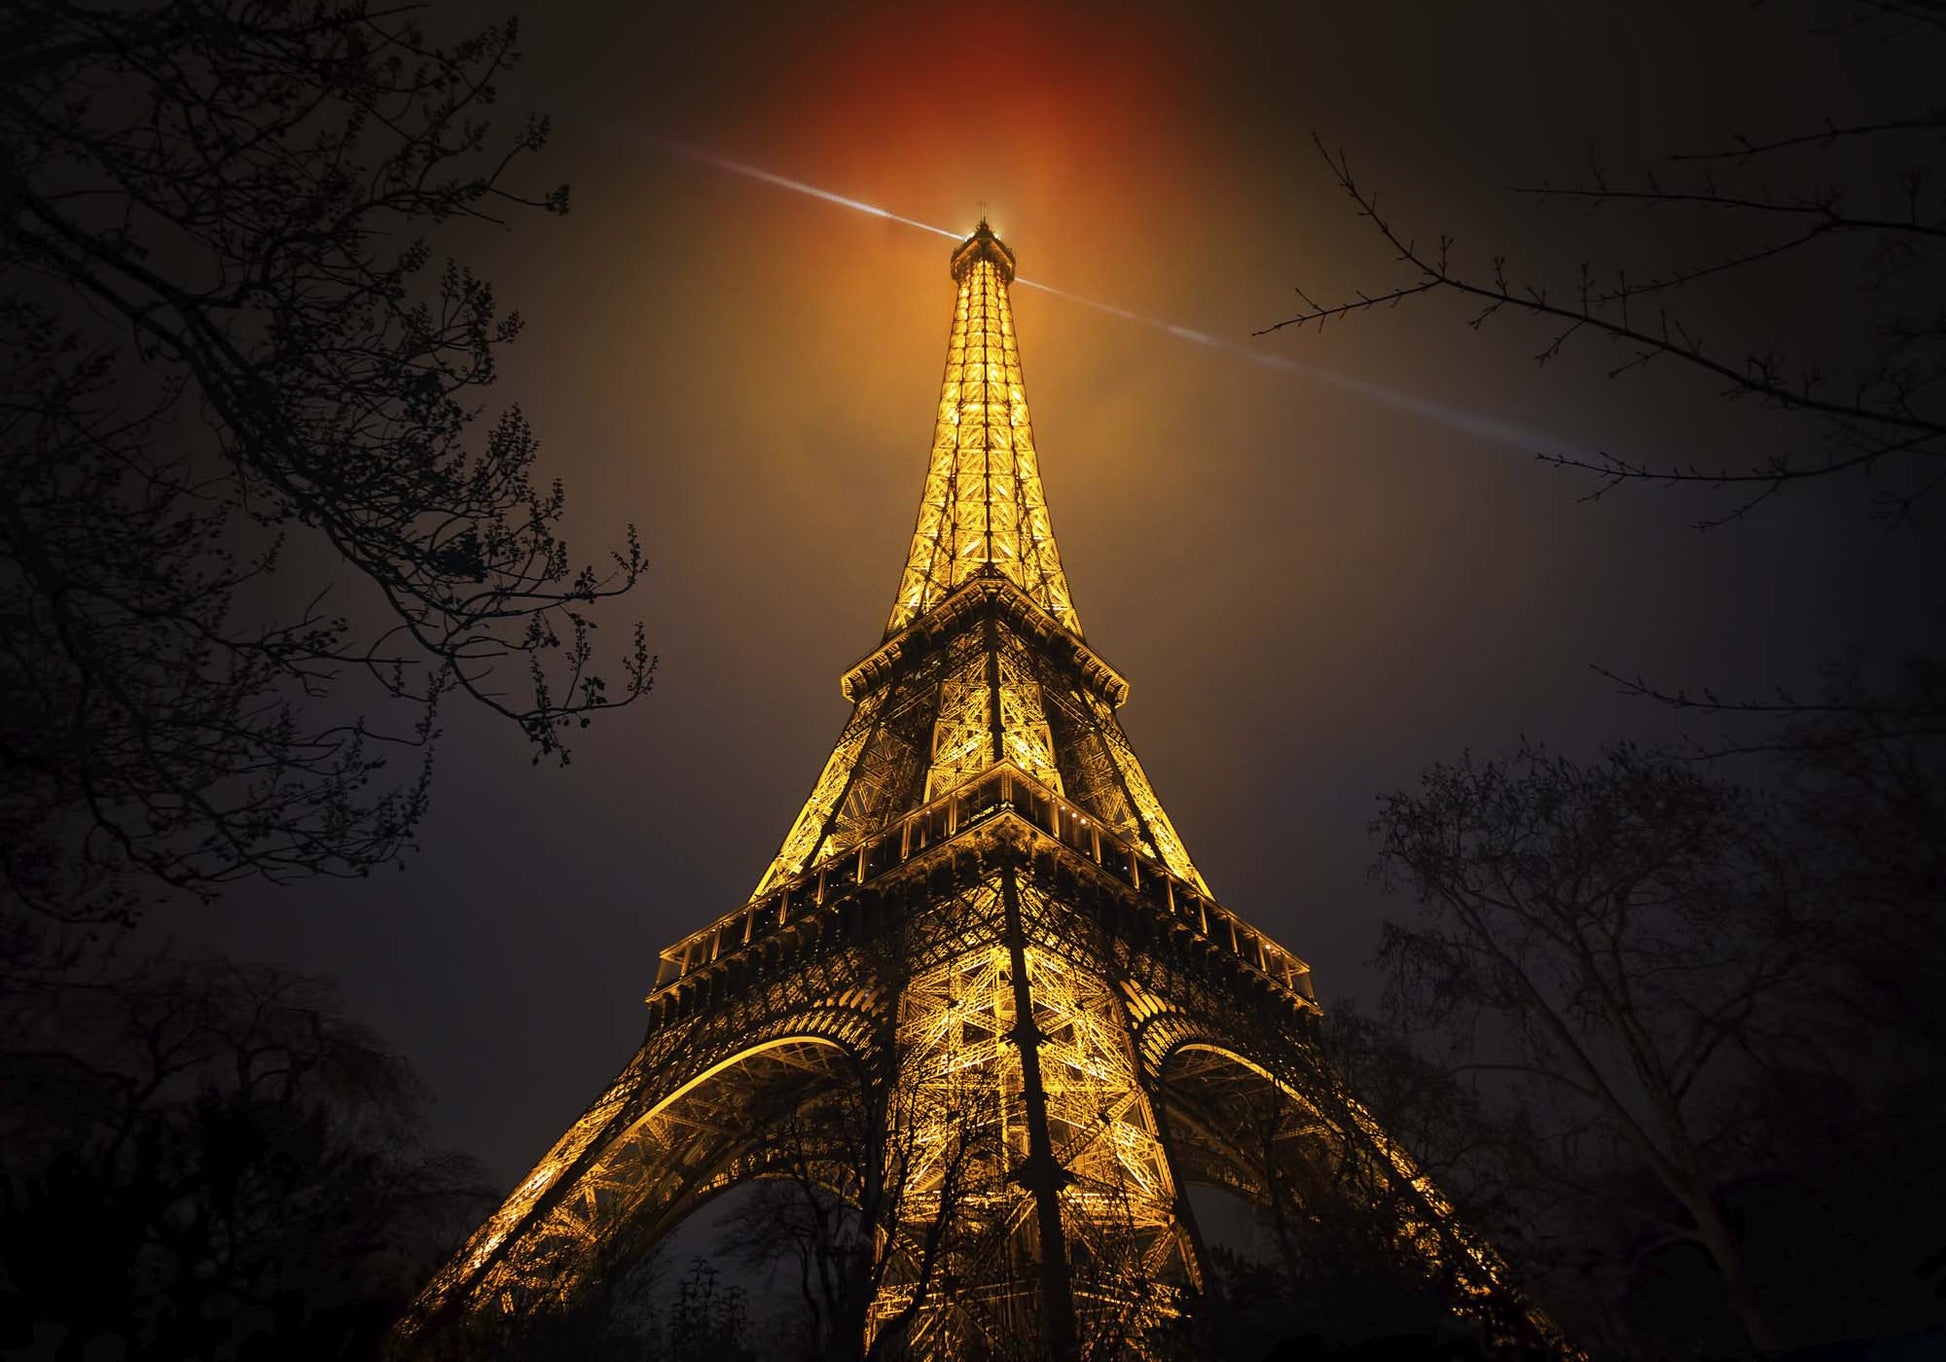 La Tour Eiffel by Clemens Geiger Framed Print - USTAD HOME